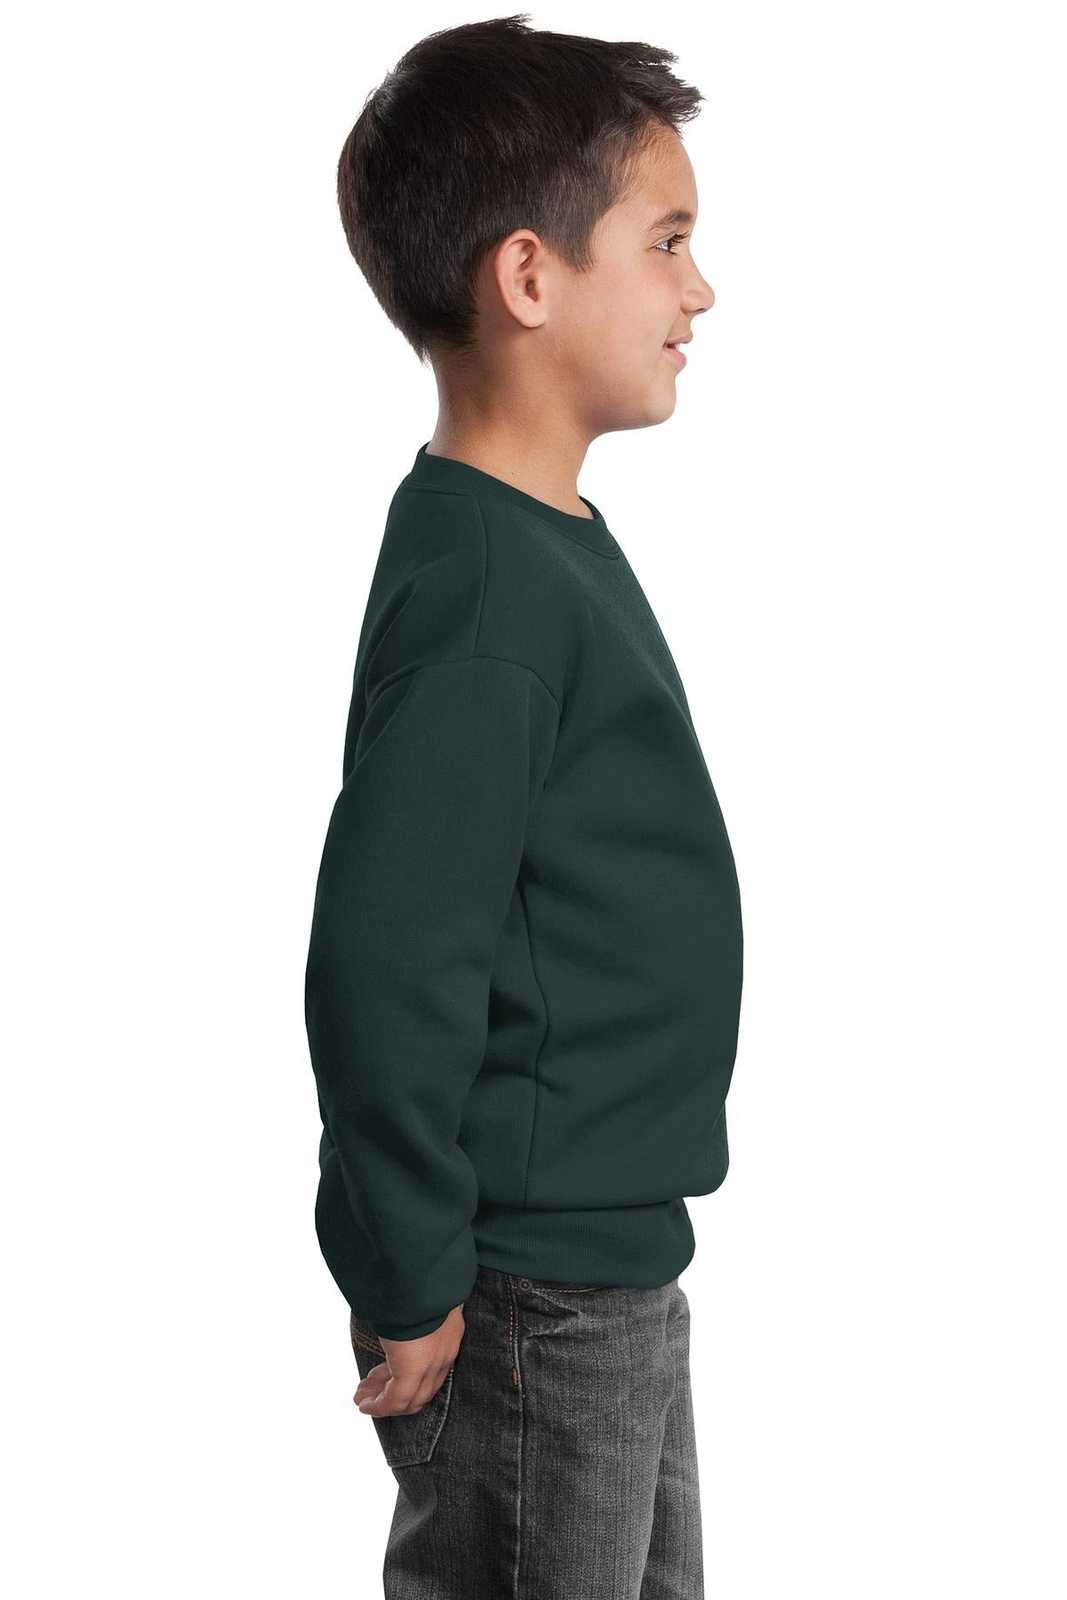 Port &amp; Company PC90Y Youth Core Fleece Crewneck Sweatshirt - Dark Green - HIT a Double - 3